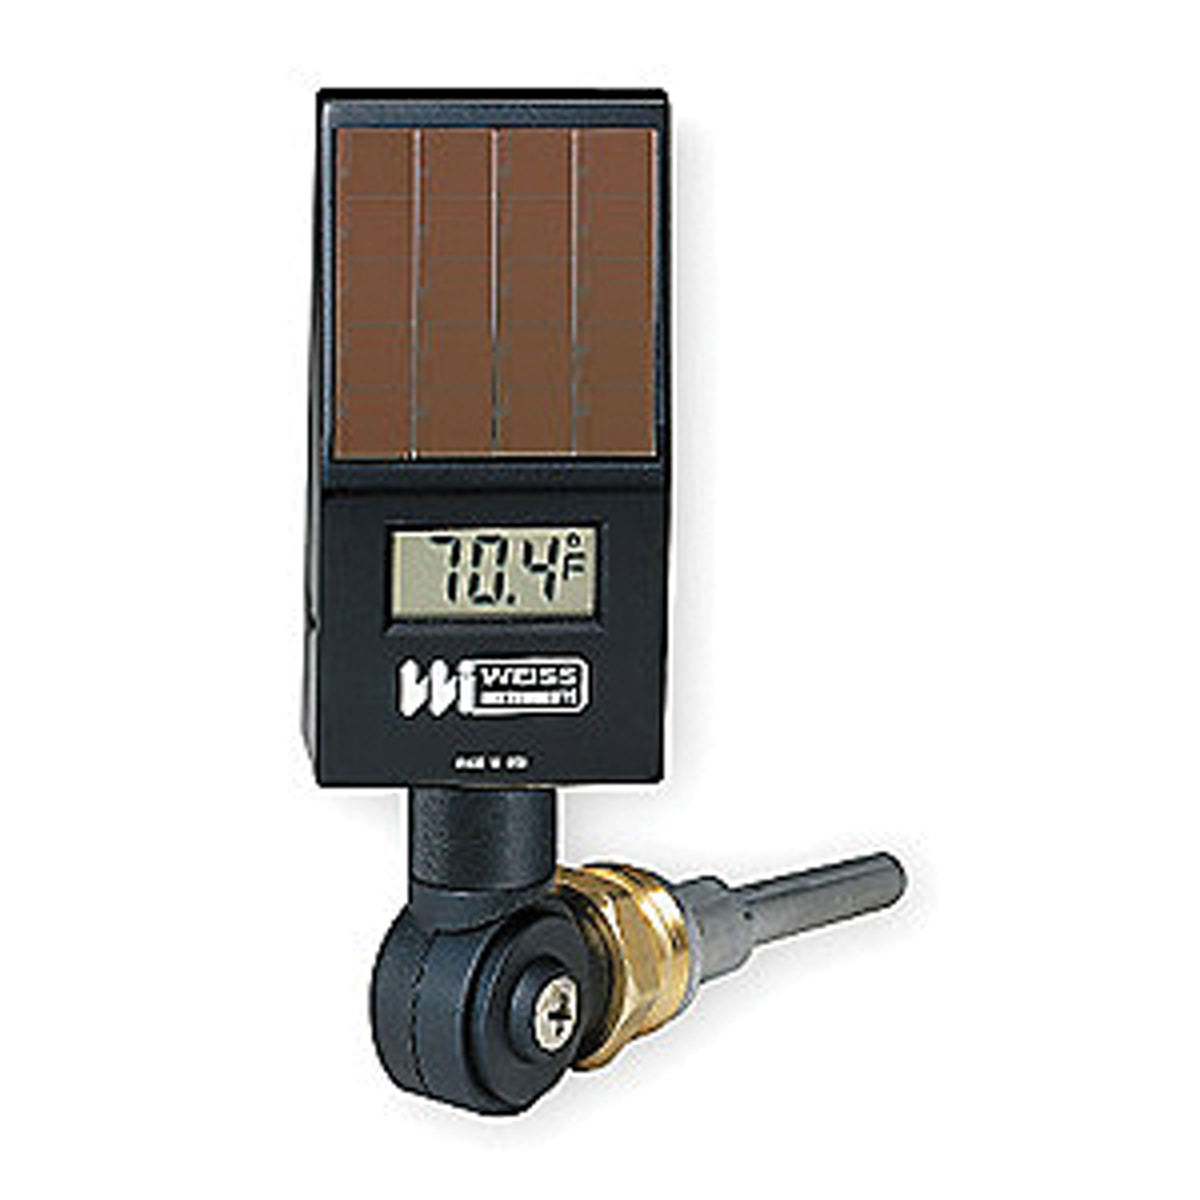 Weiss Instruments DVU35 Digital Vari-angle Thermometer - 3-1/2" Industrial Stem